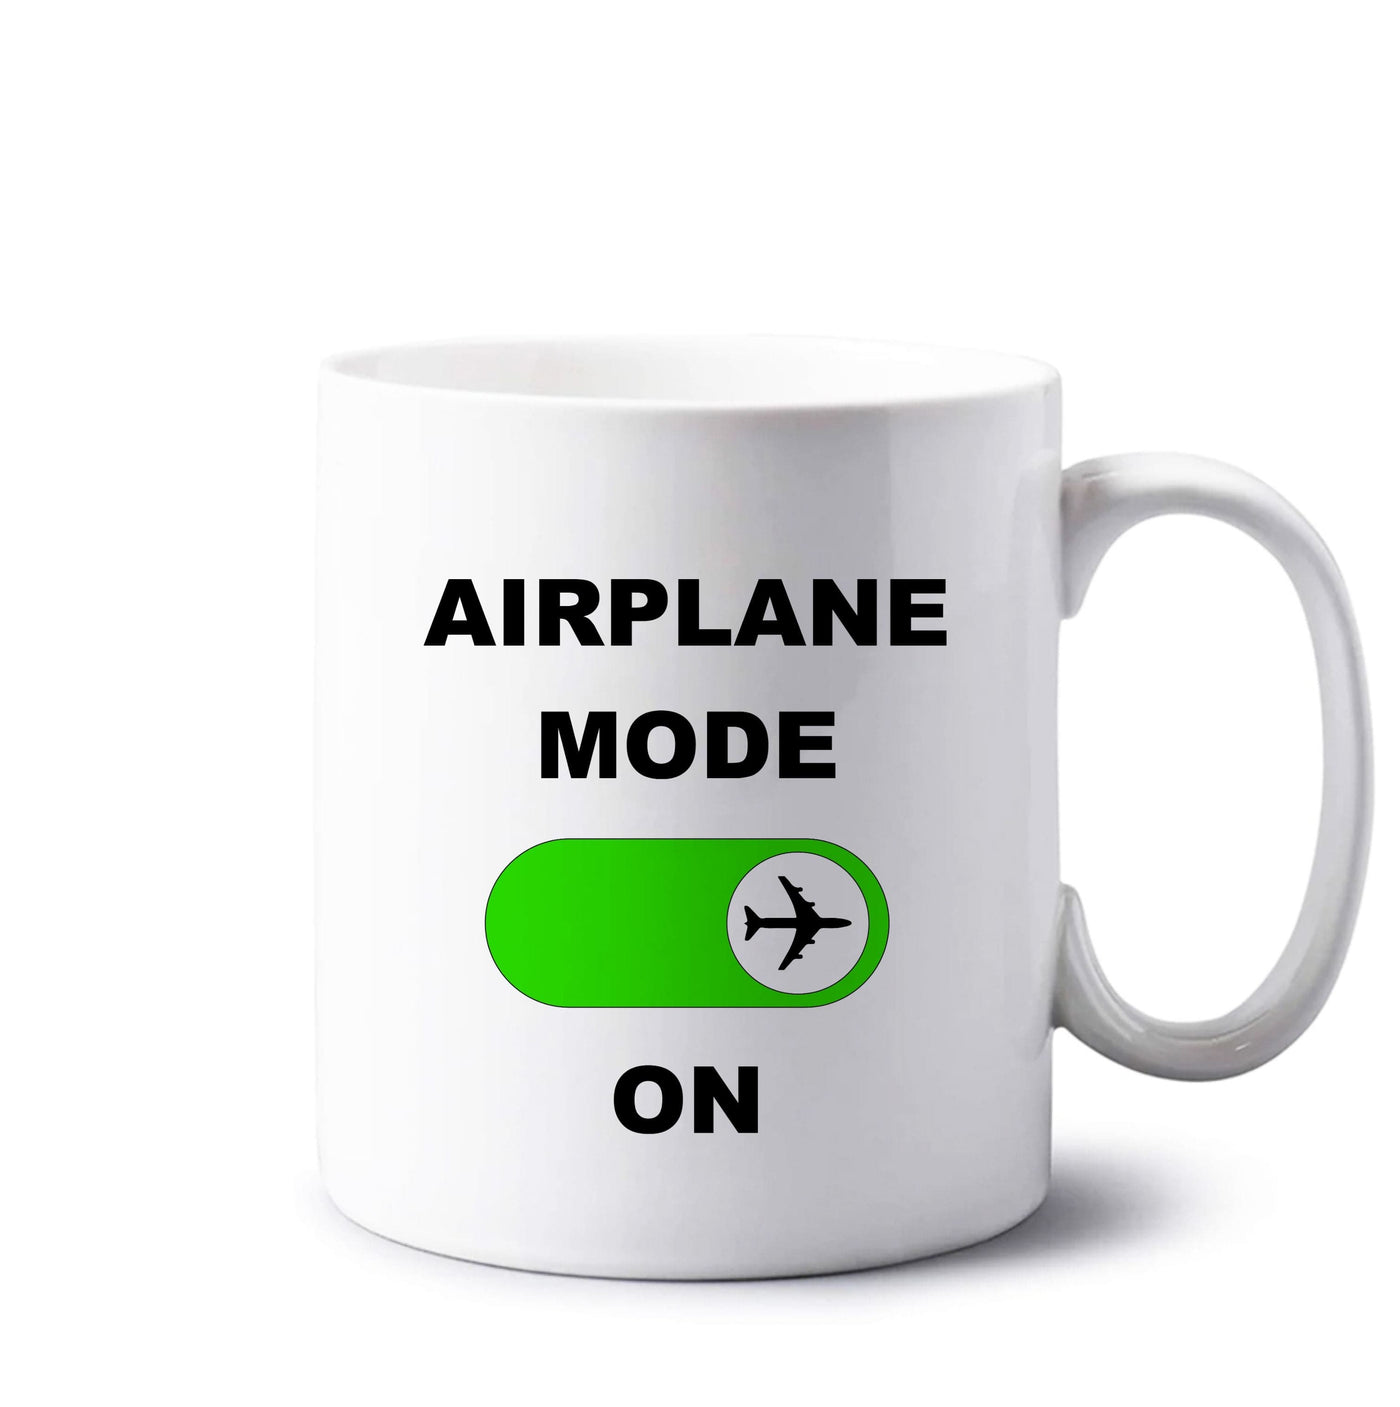 Airplane Mode On - Travel Mug